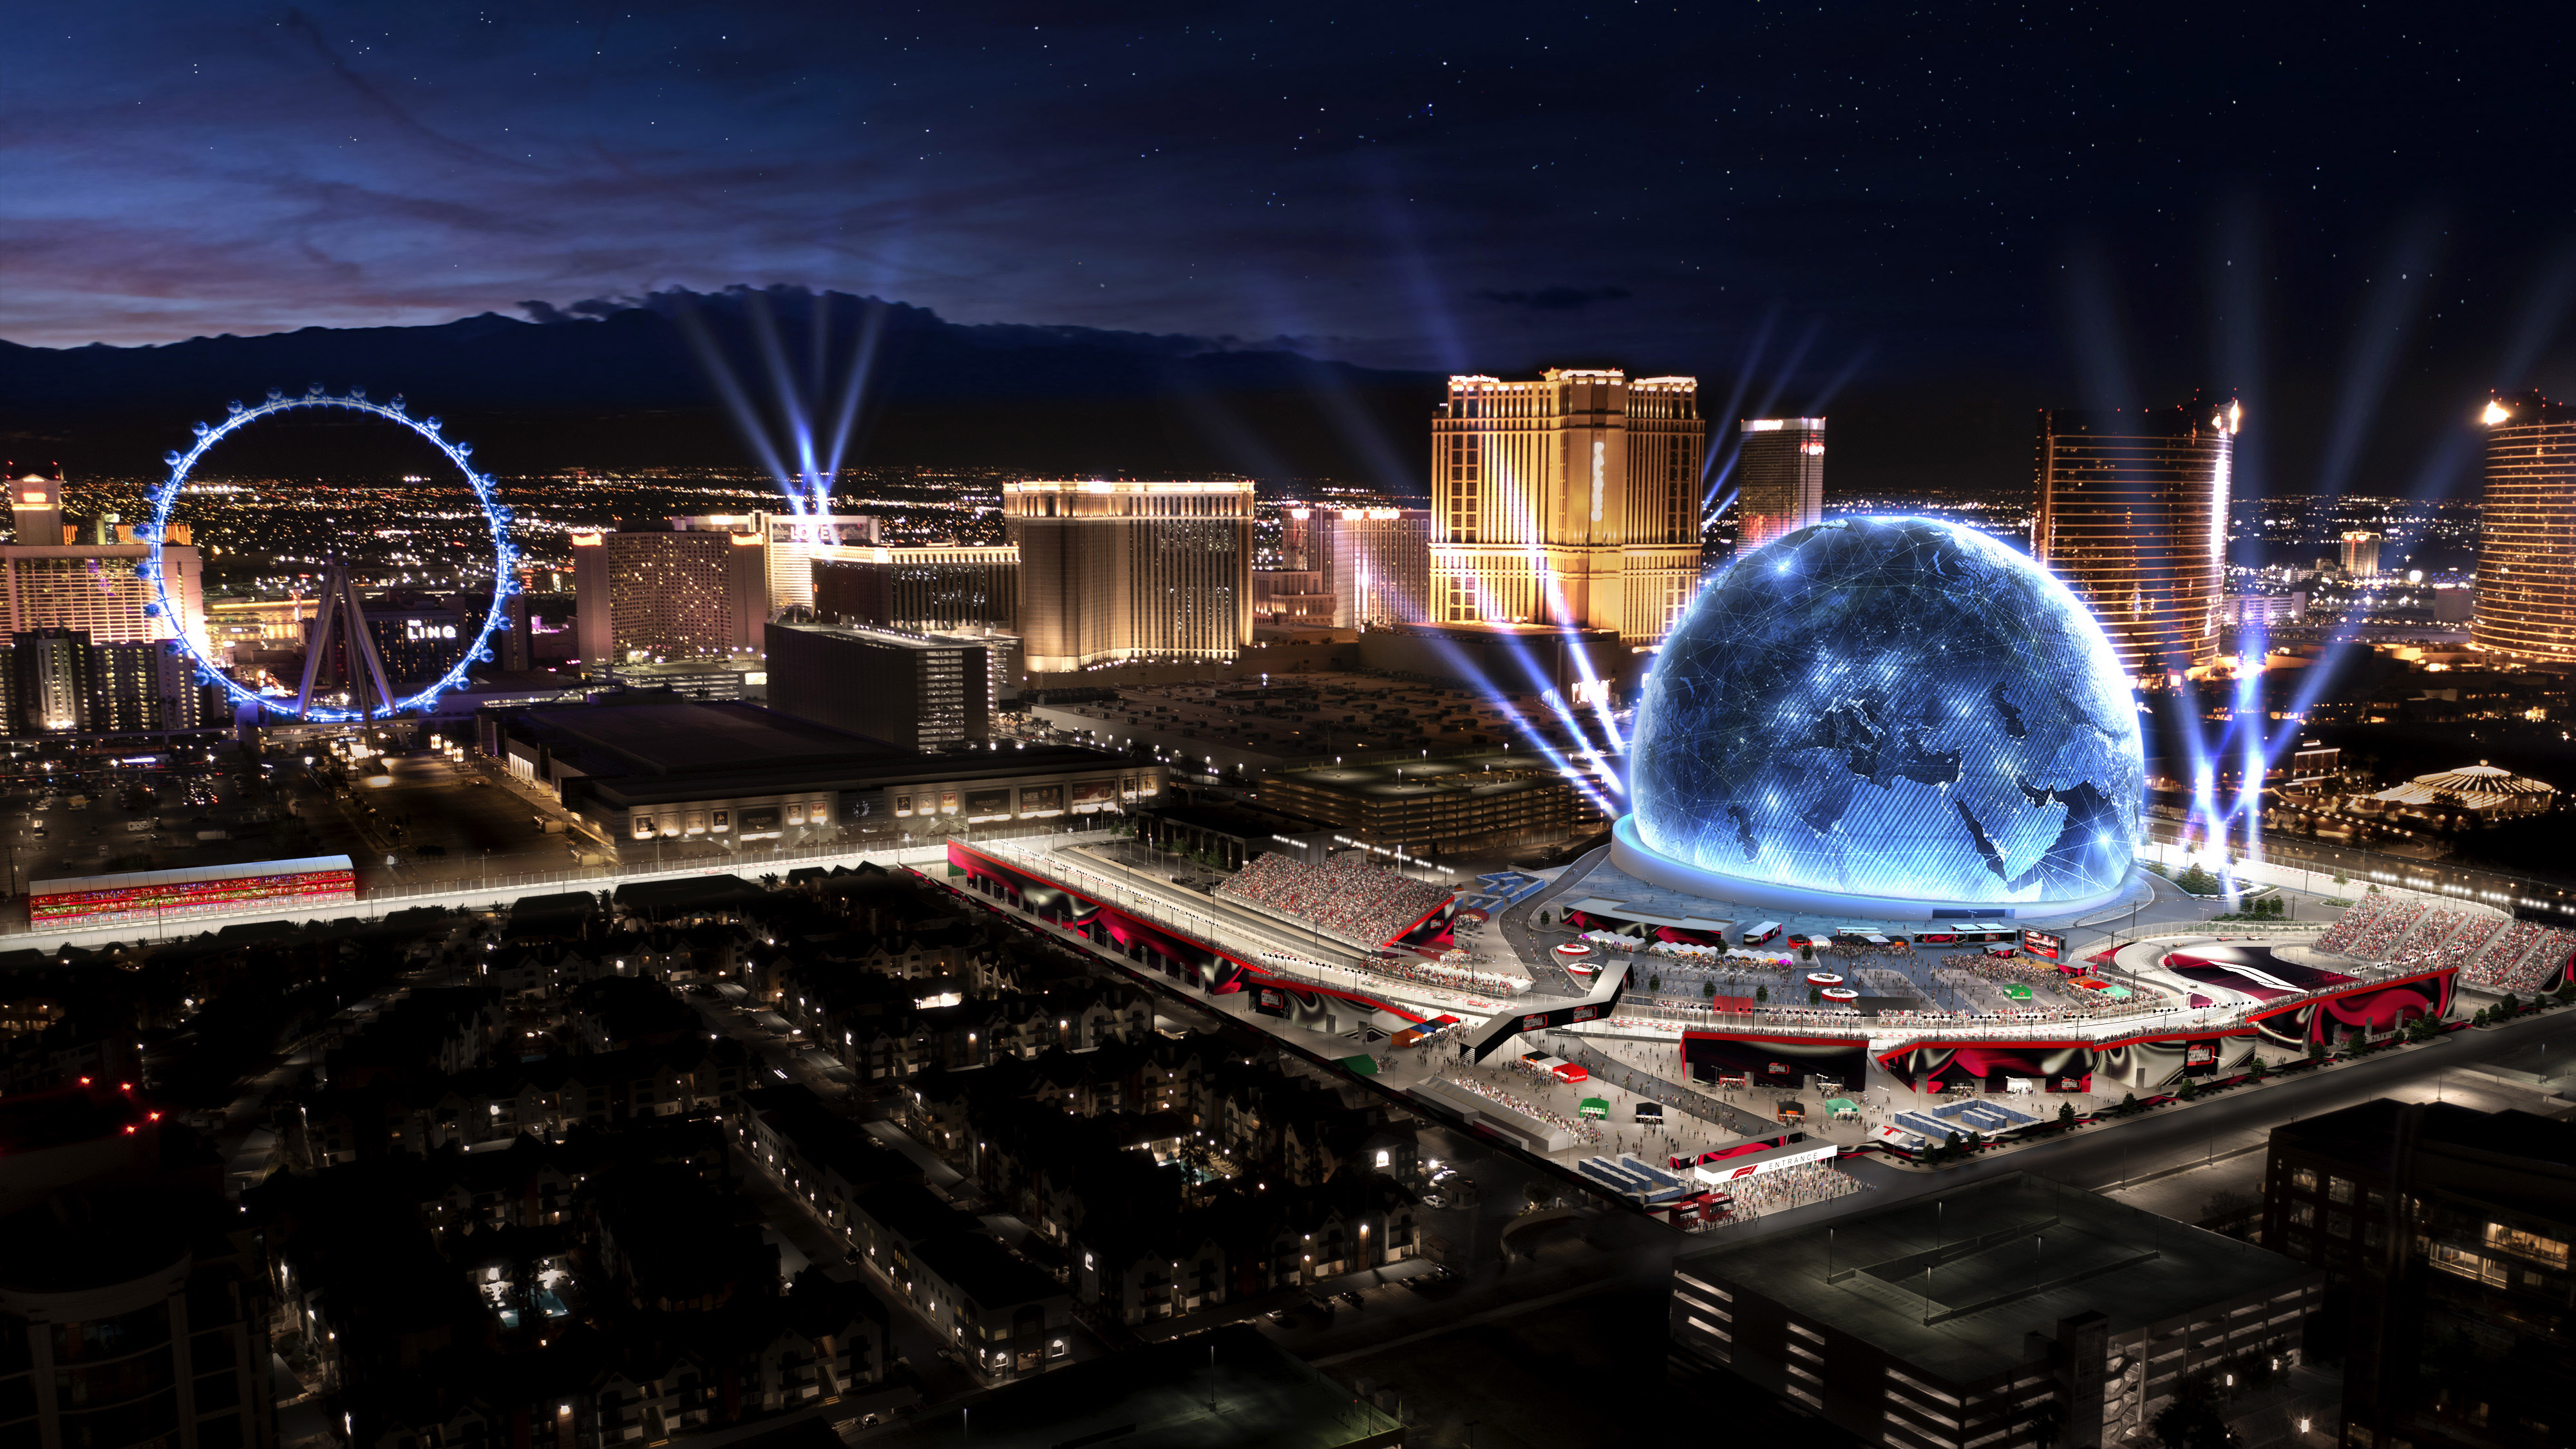 The Venetian Resort Las Vegas, USA 2023 / 2024